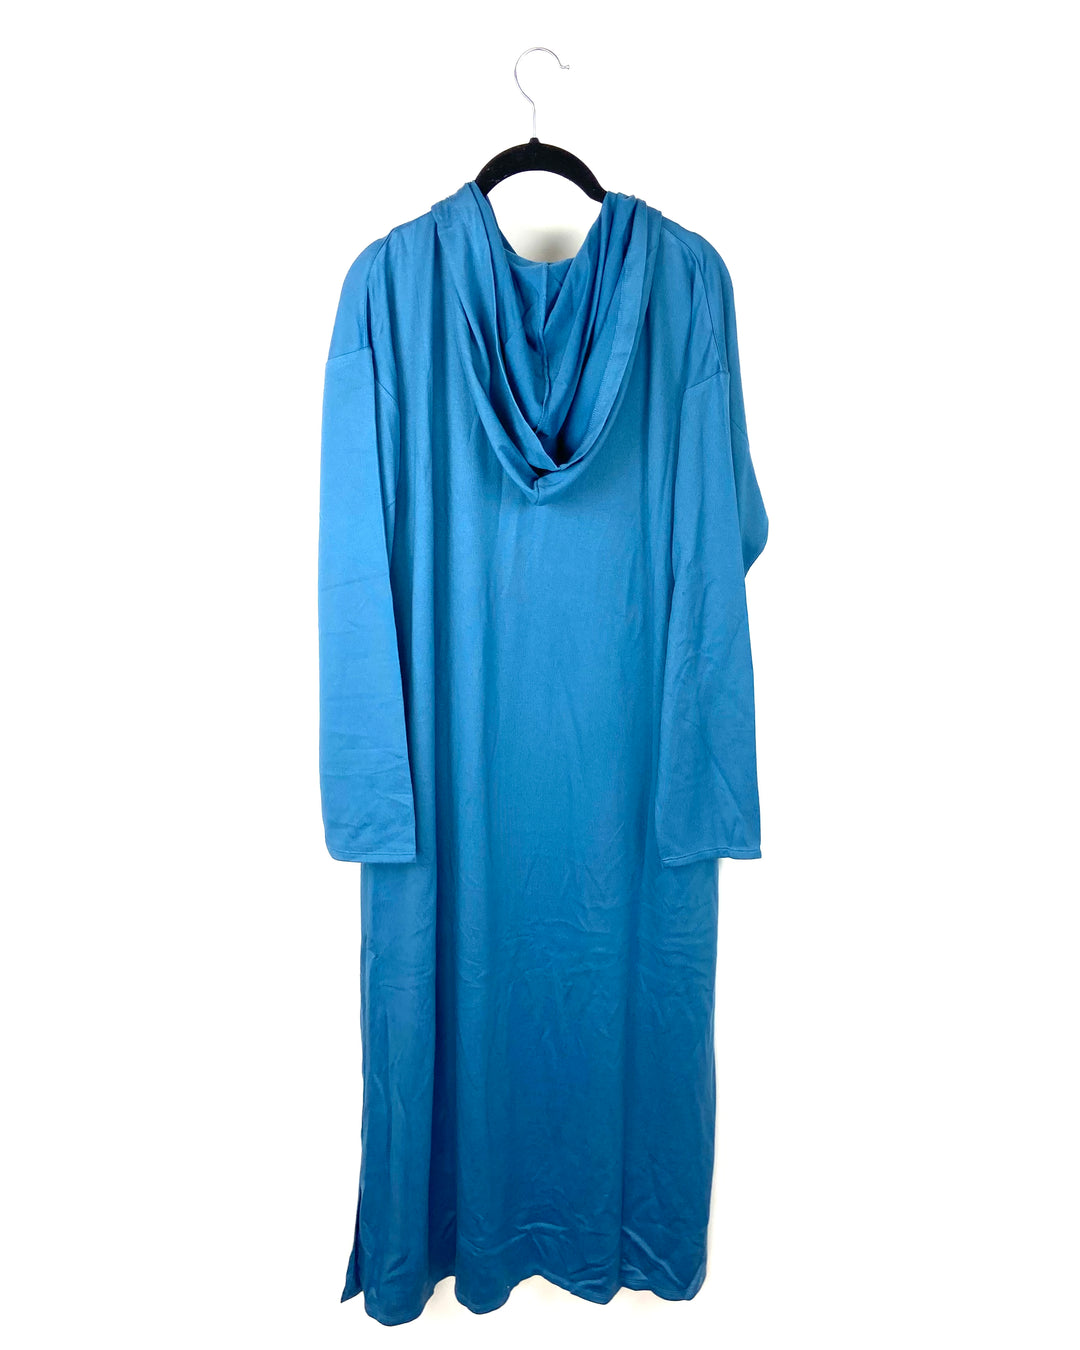 Blue Long Sleeve Lounge Dress - Size 6/8 and 10/12